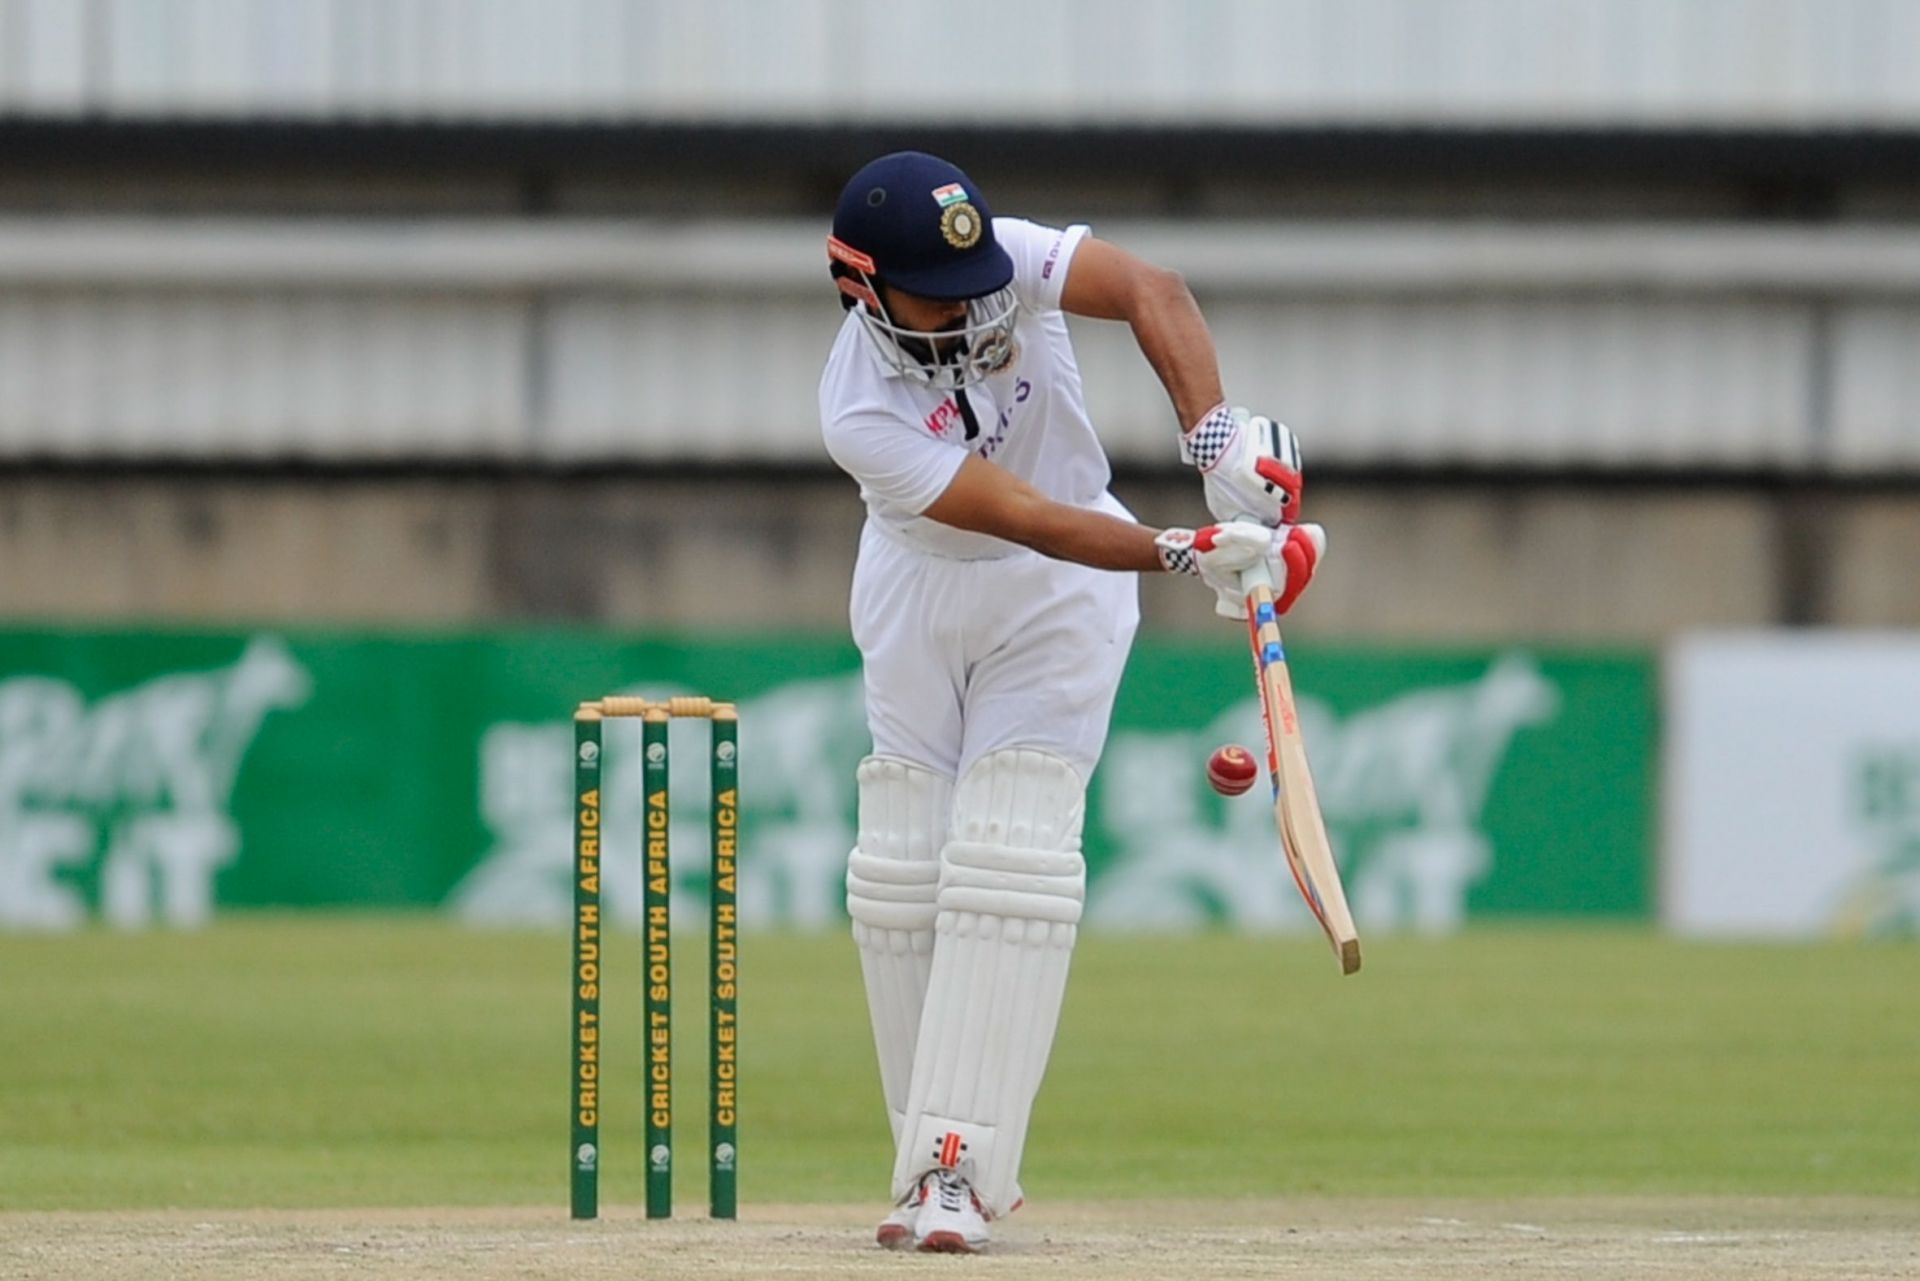 A Ranji veteran, an Assured Batsman - Priyank Panchal deserves an Indian debut